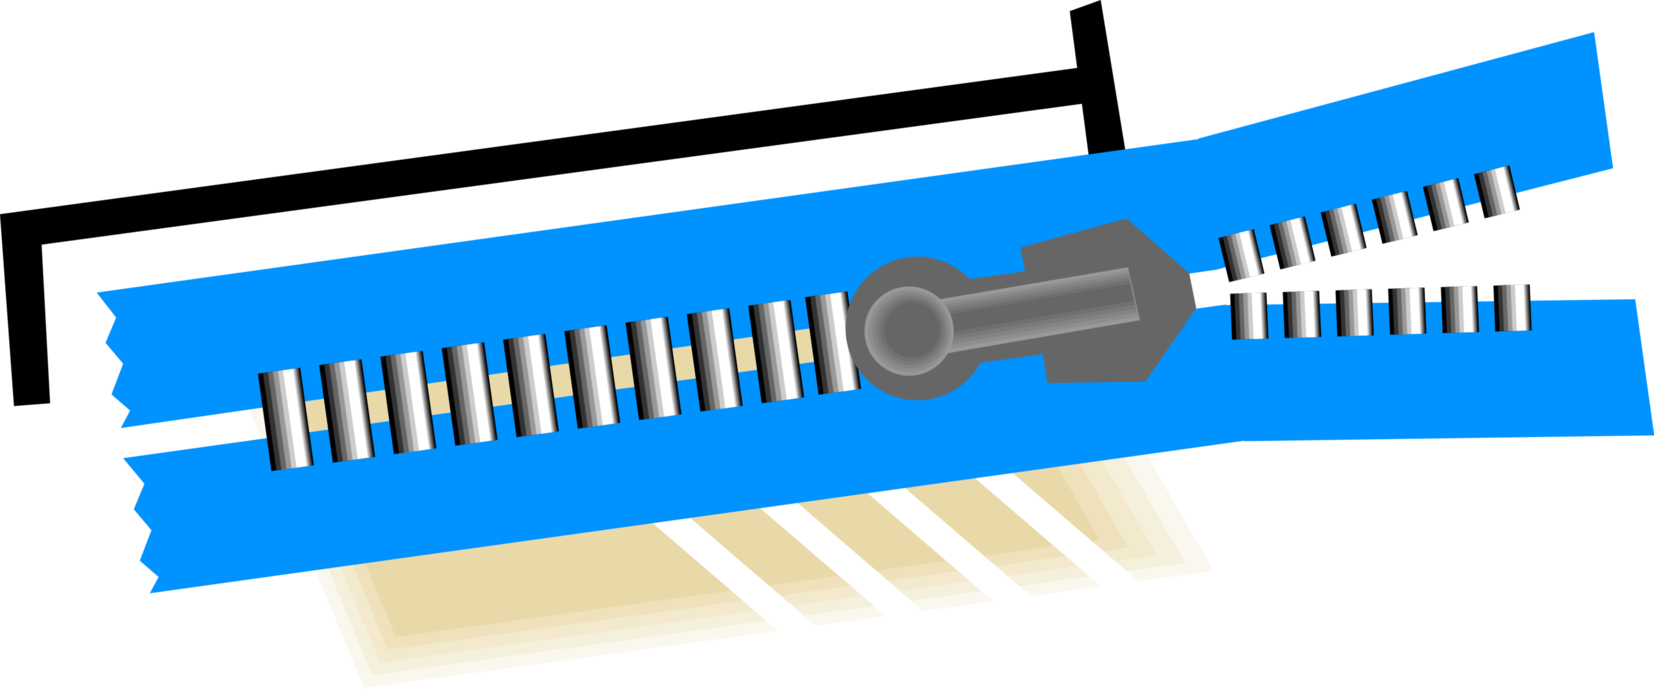 Vector Illustration of Zipper or Zip Fastener Uses Interlocking Teeth